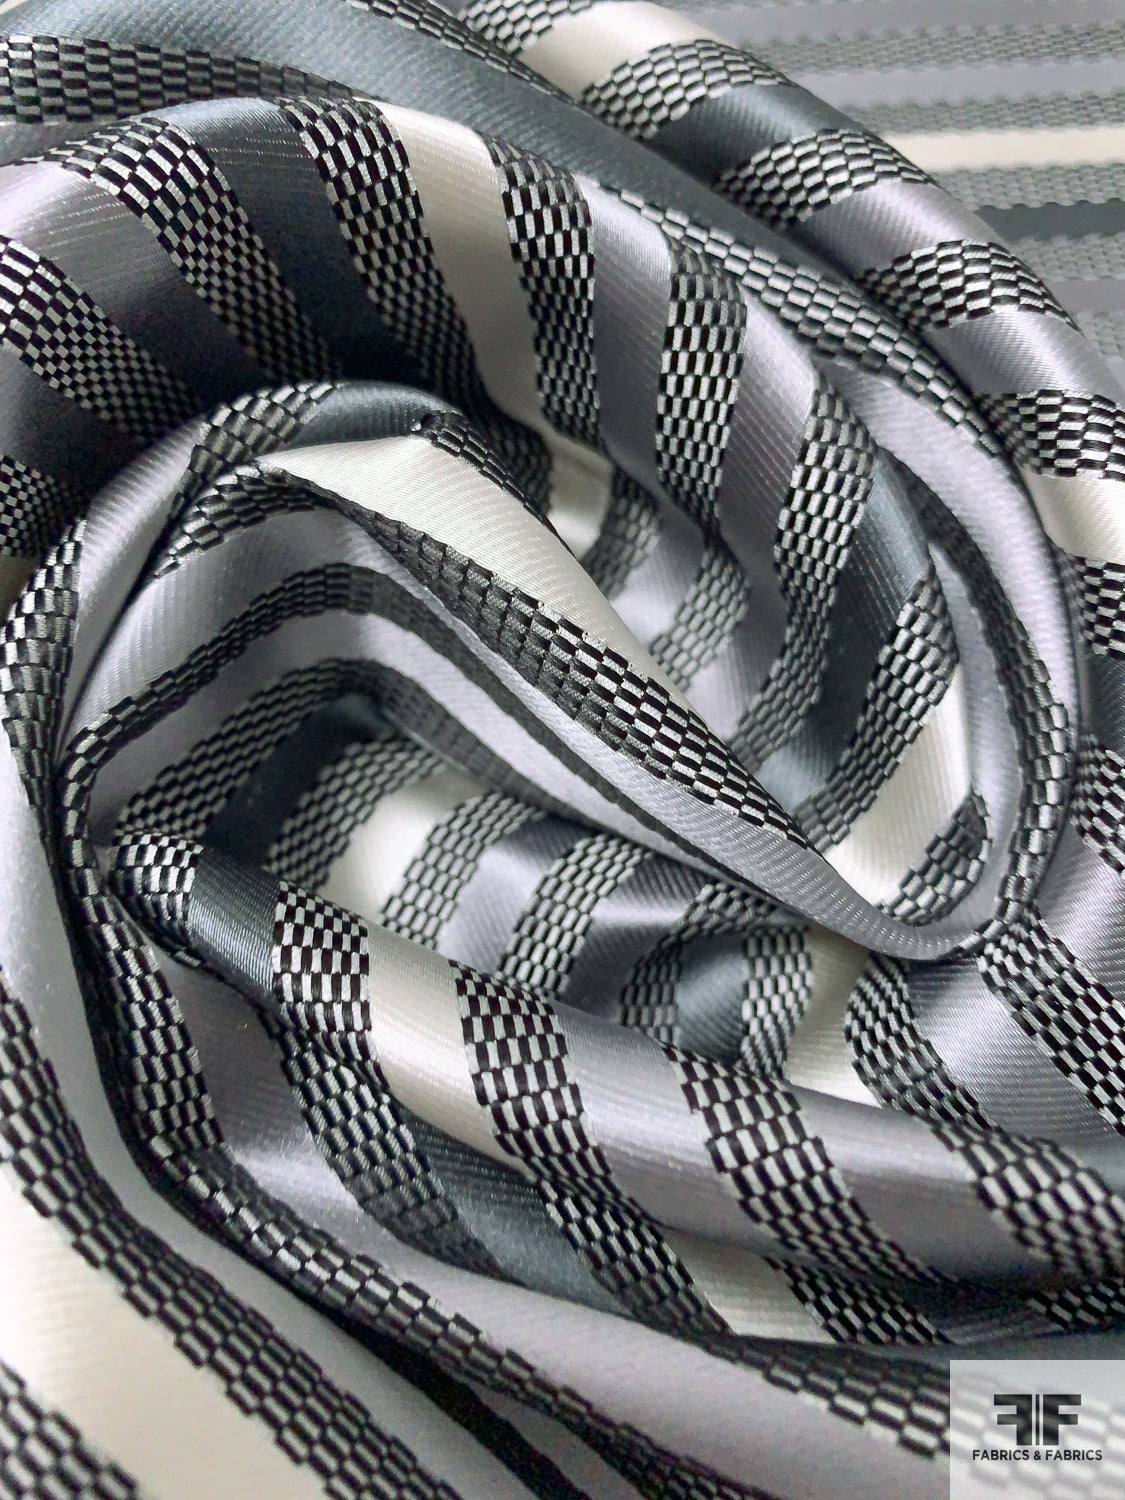 Horizontal Striped Silk Necktie Jacquard Brocade - Greys / Black / White